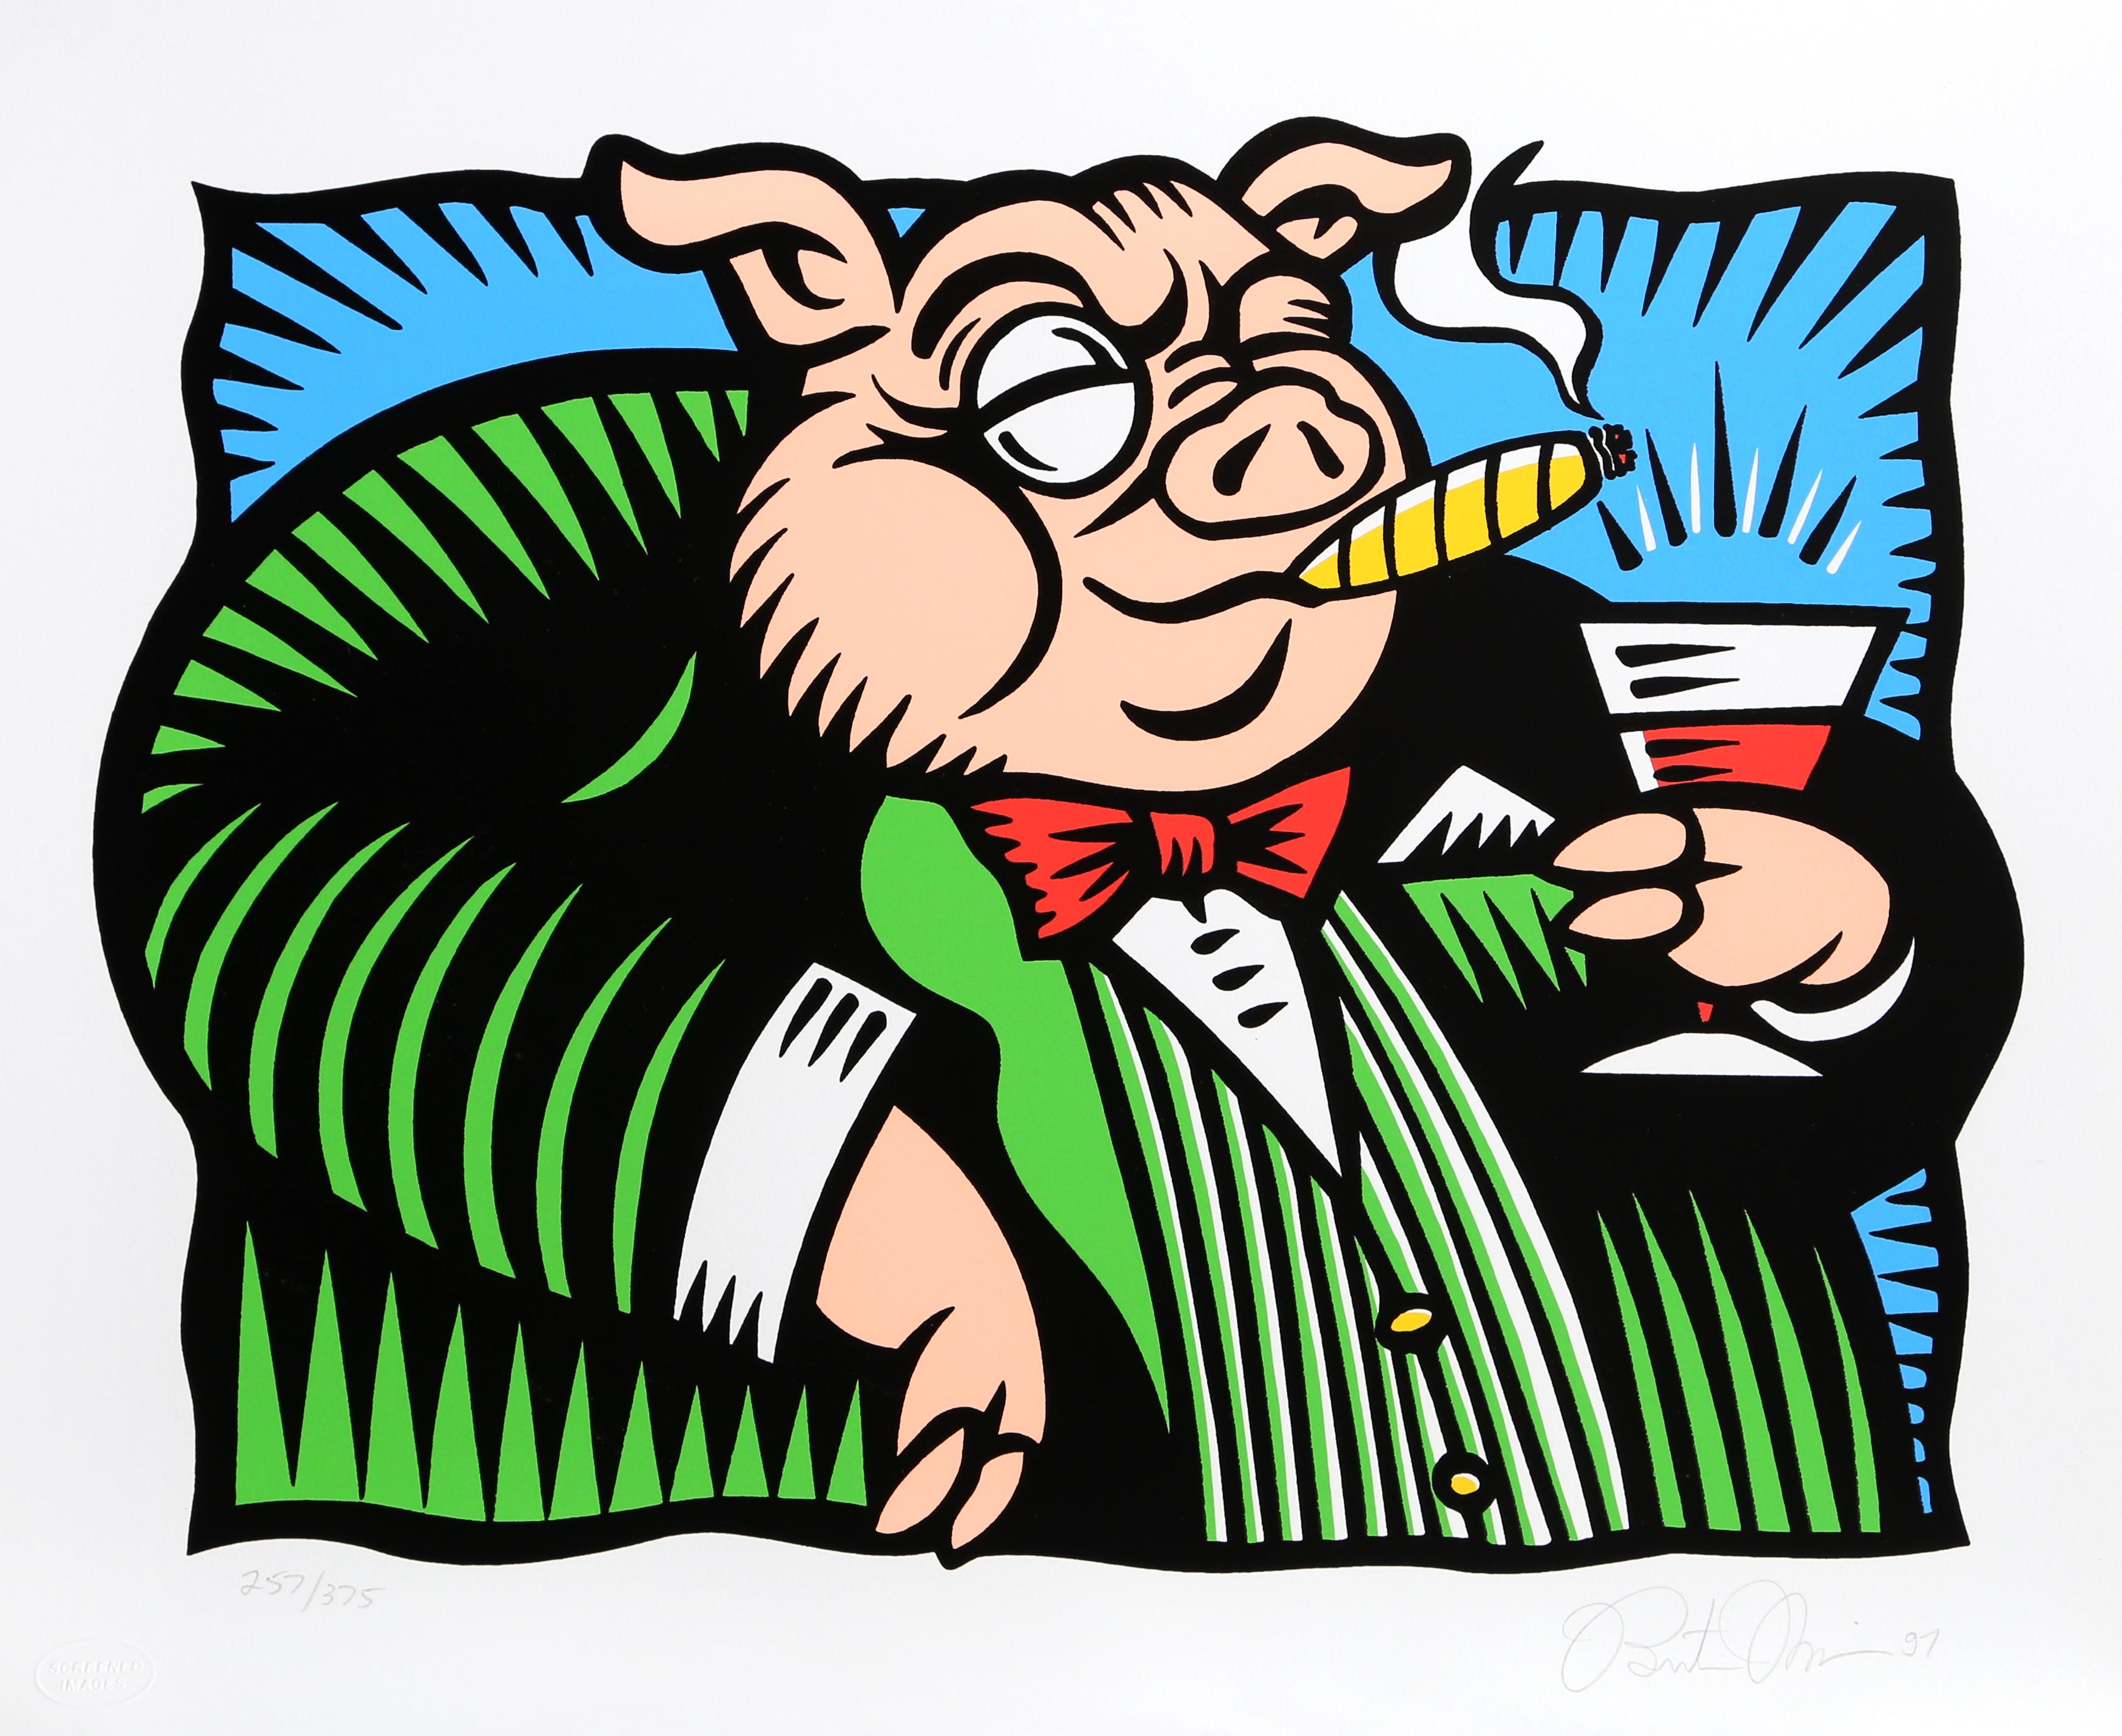 Burton Morris - "The Pig", Pop Art by Morris For Sale at 1stDibs burton morris art, pop art pig